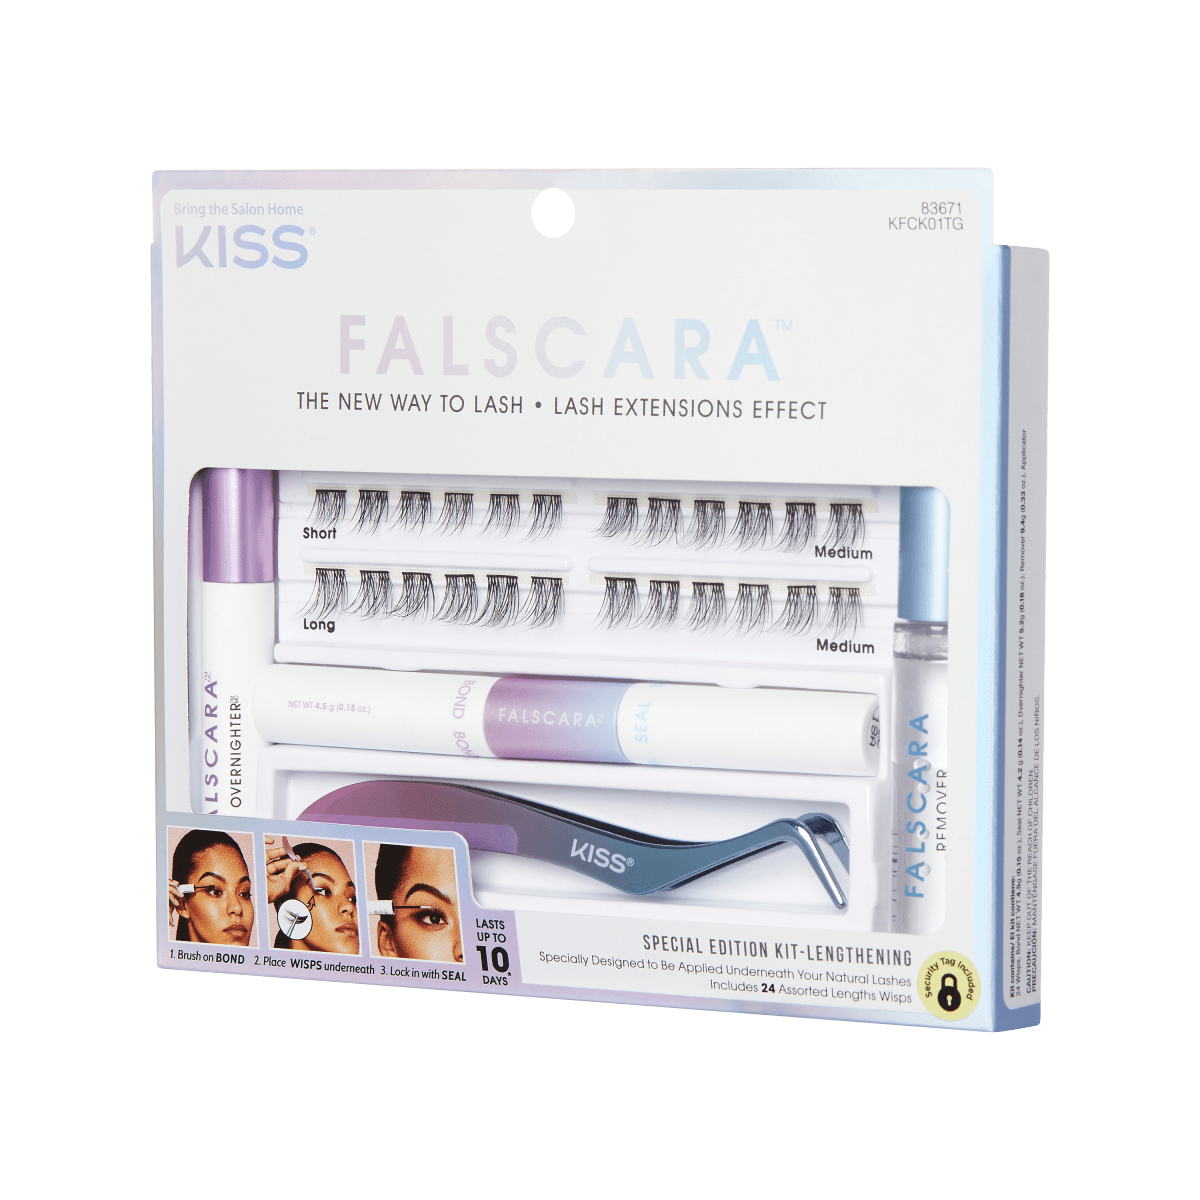 Package of Falscara DIY Eyelash extension starter kit includes 24 lash wisps, eyelash applicator, lash bond and seal and remover